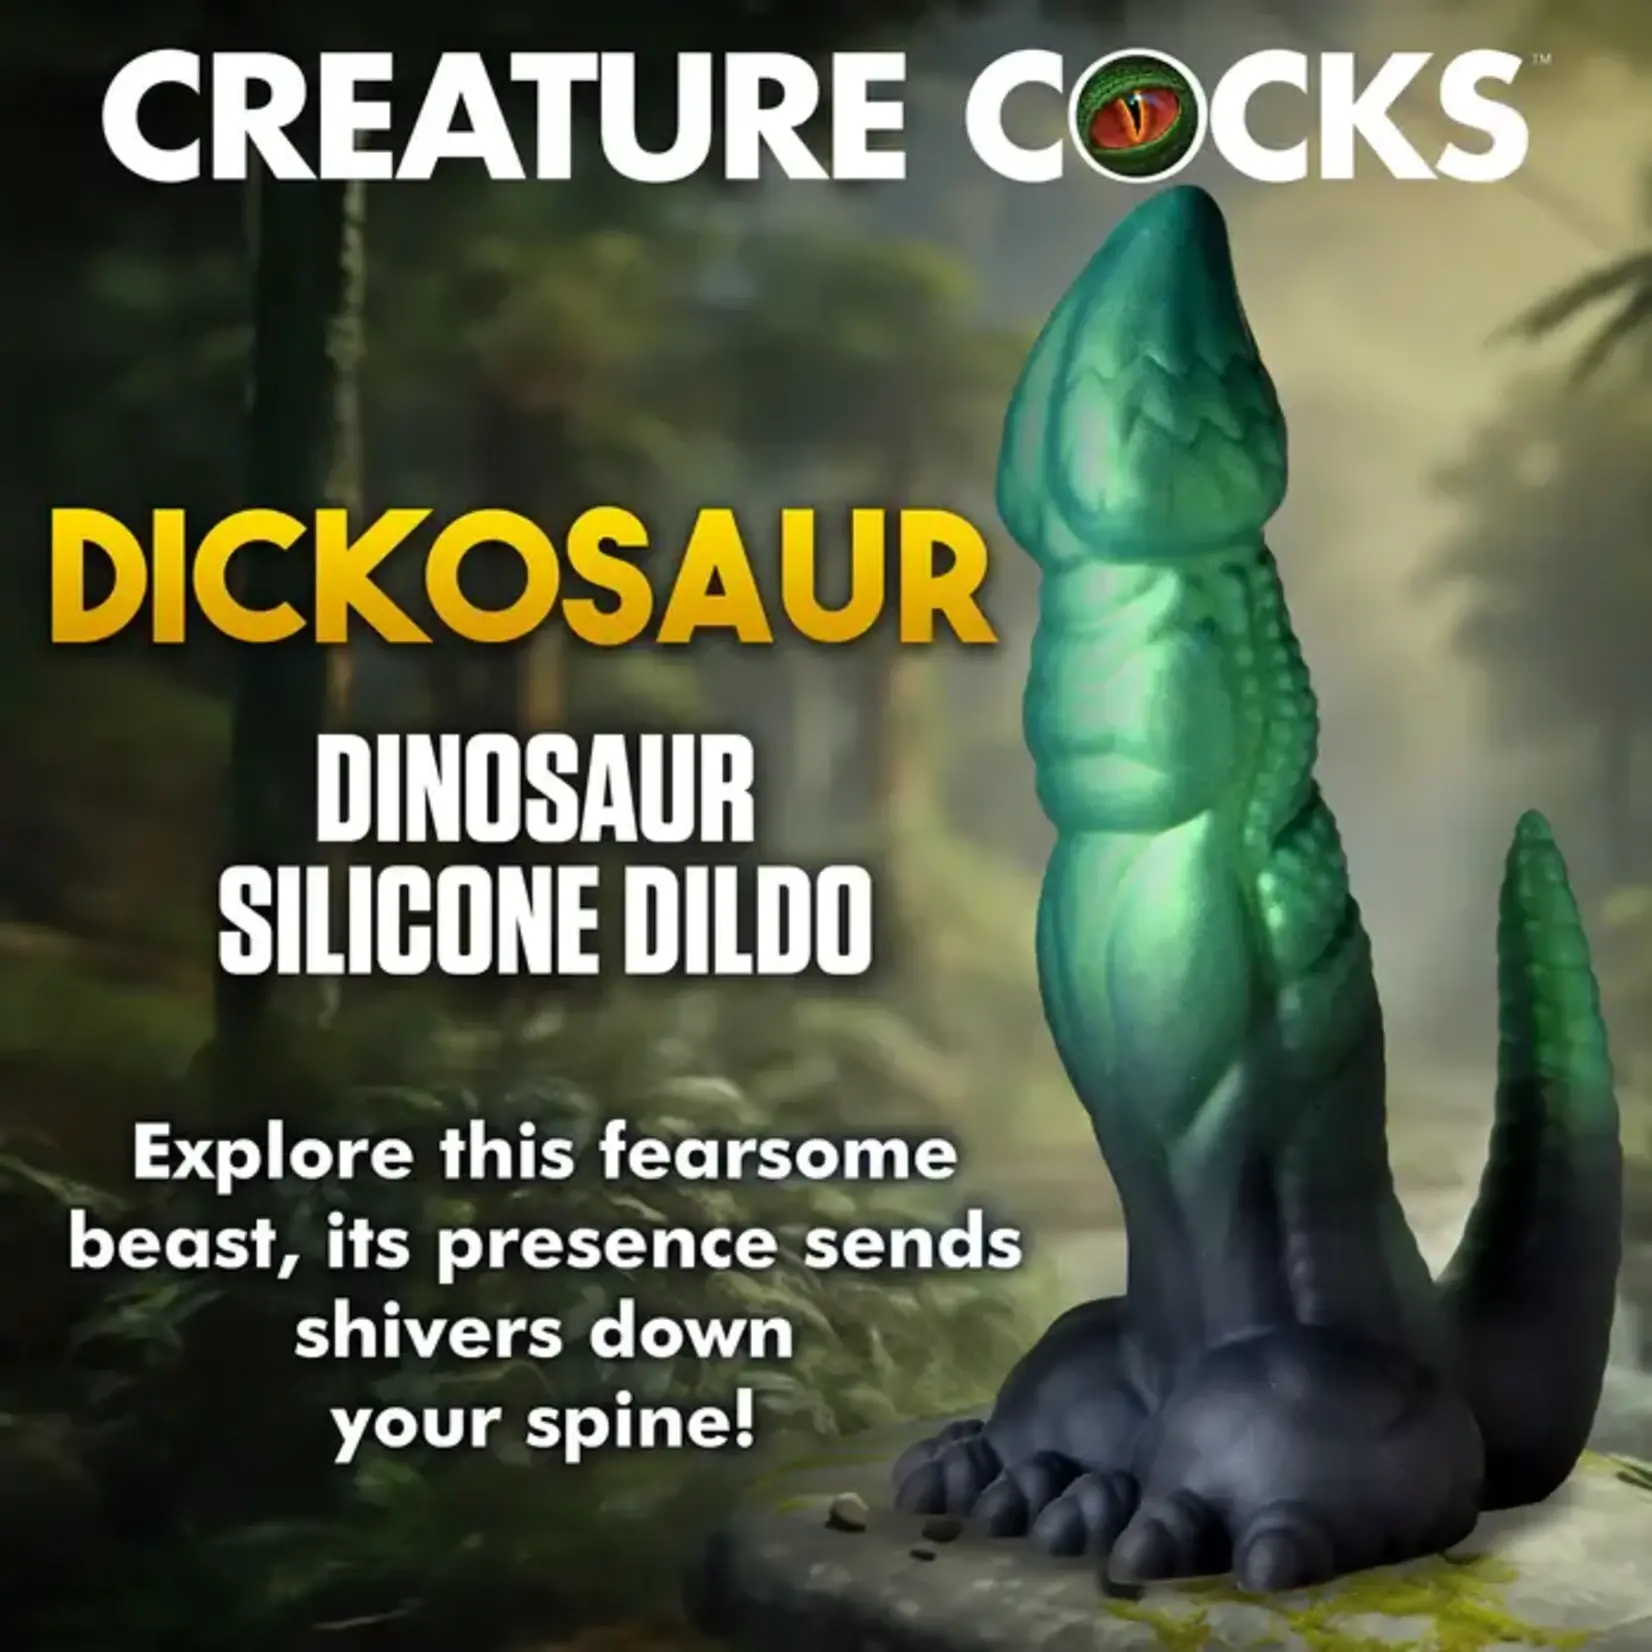 Creature Cocks Dickosaur Dinosaur Silicone Dildo - Green/Black